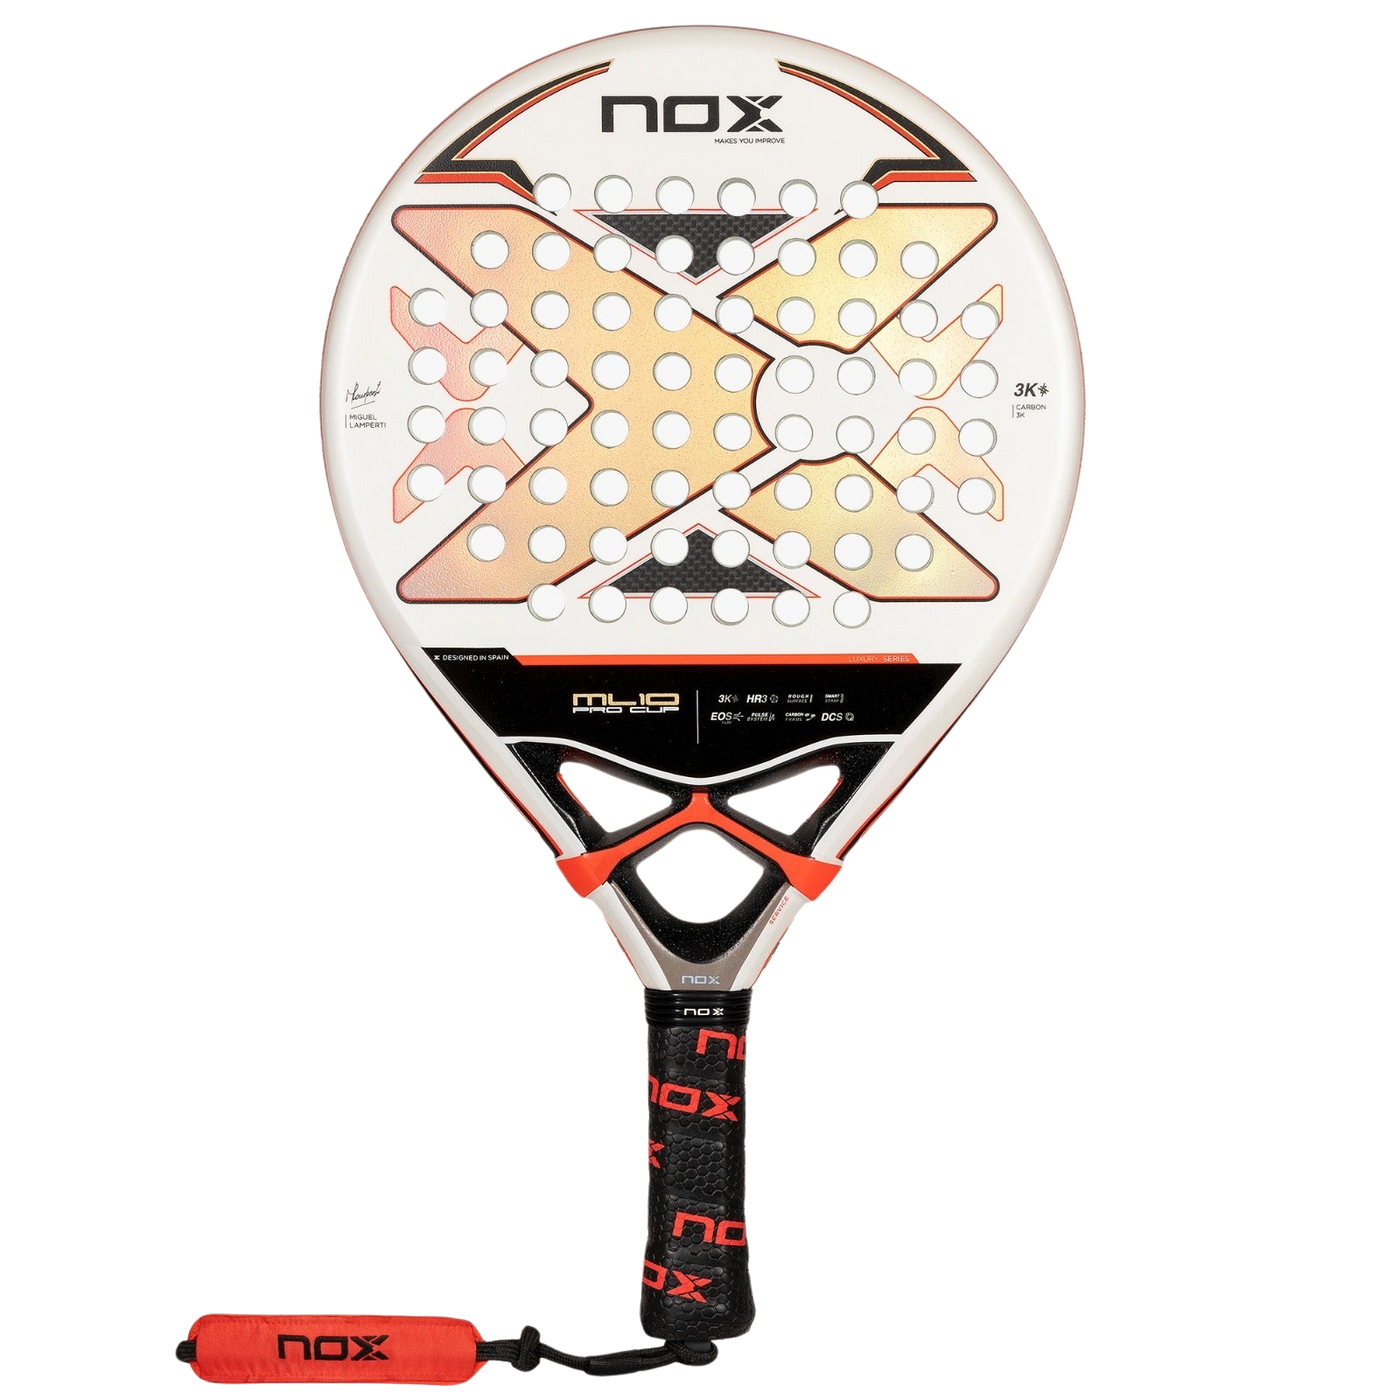 NOX Padel Racket ML 10 Pro Cup Luxury 24 - Casas Padel